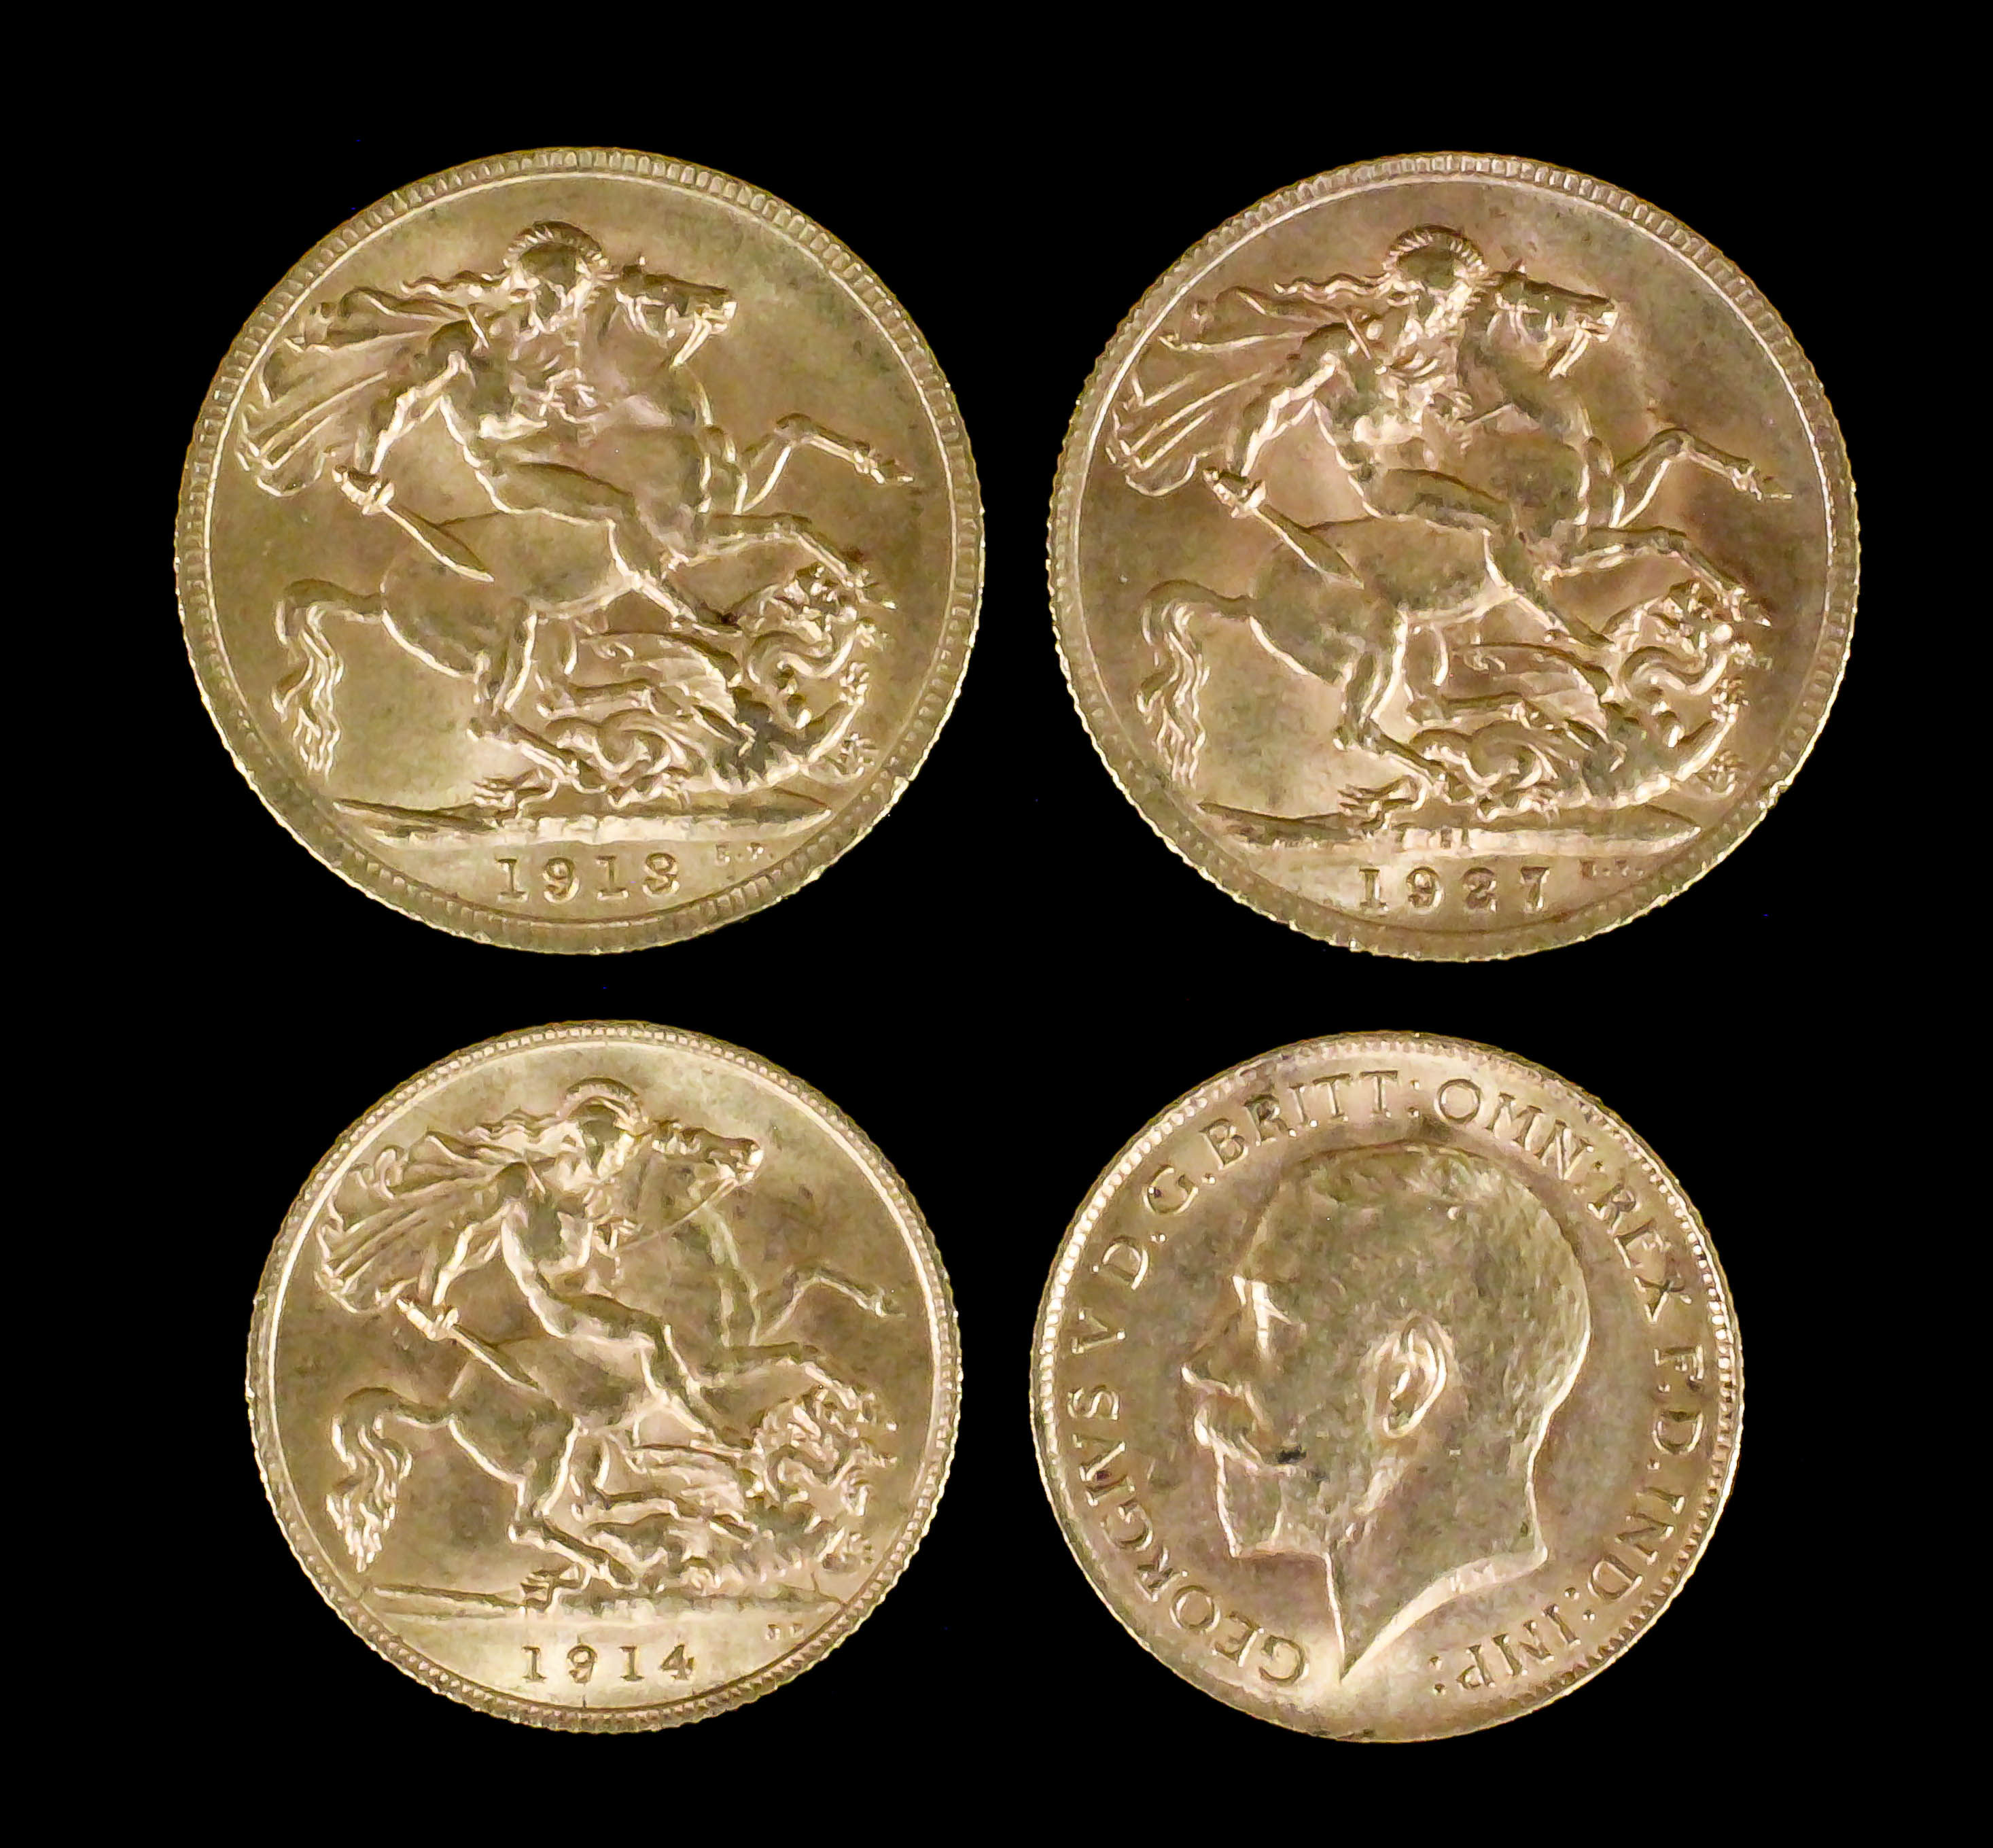 A George V 1913 Sovereign, a George V 1927 Sovereign, and two George V 1914 Half Sovereigns (